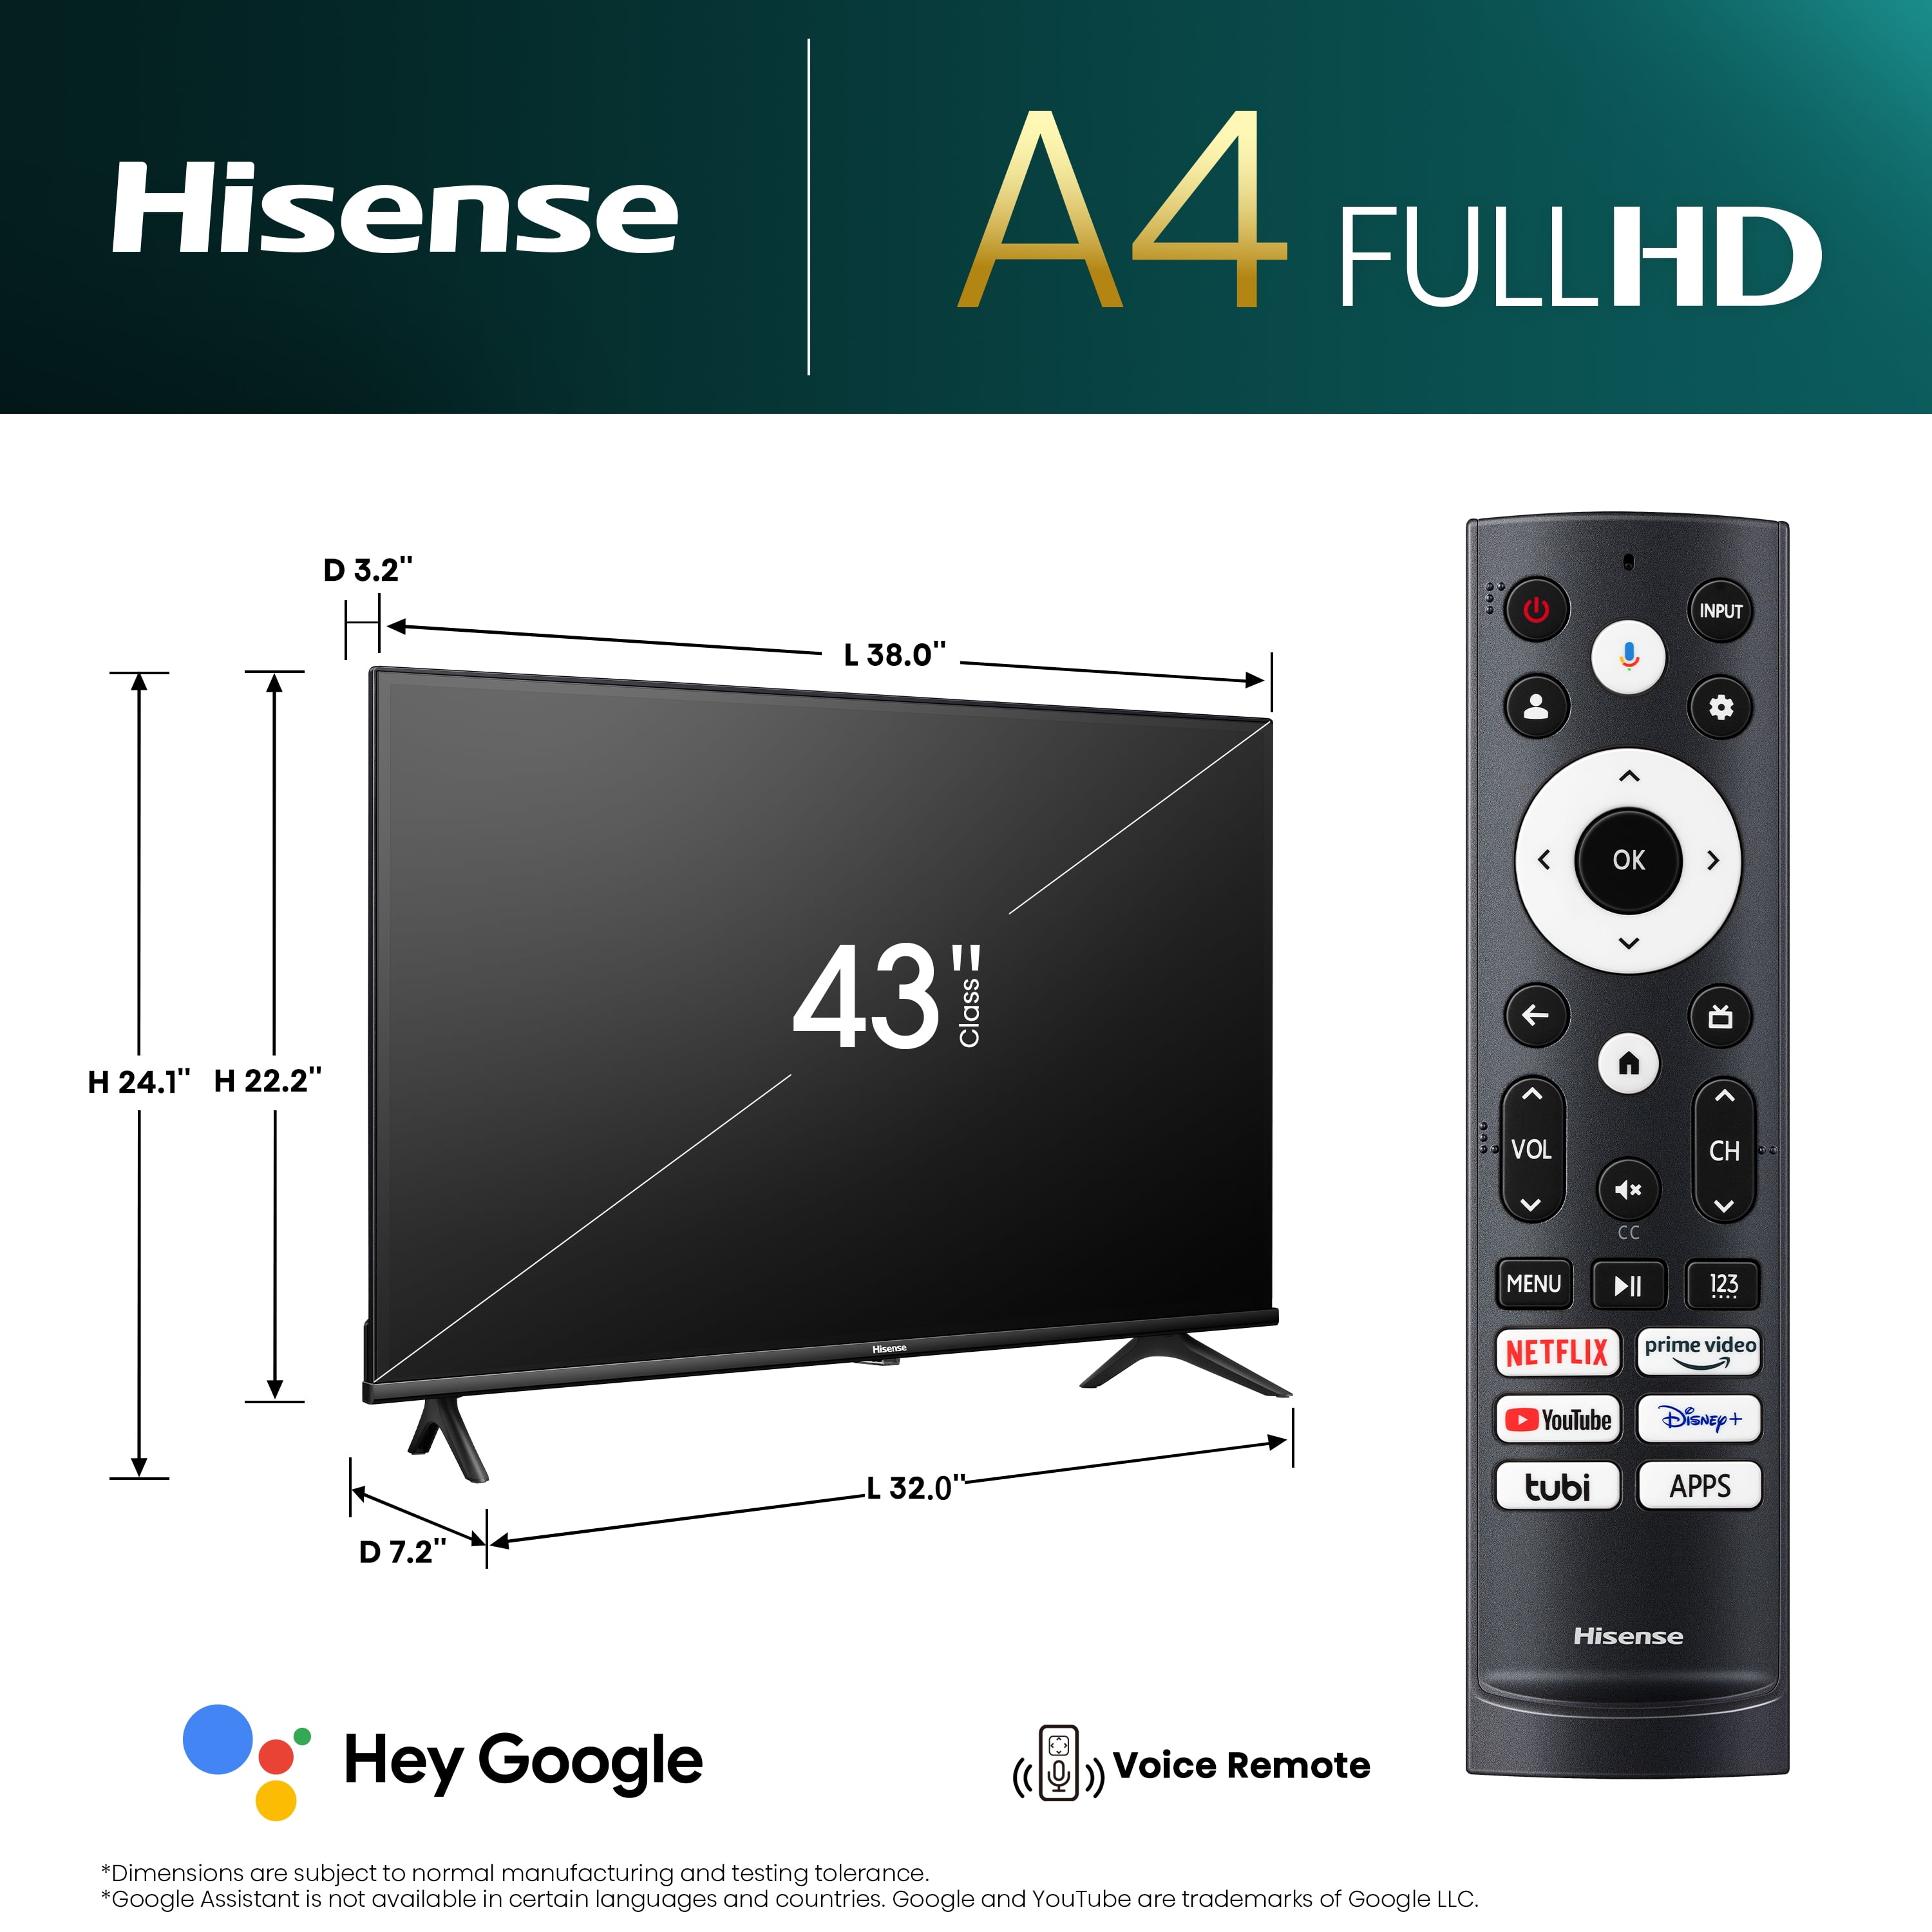 Hisense 43 Class A4 Series LED 1080p Smart Android TV 43A4H (43A4H) -  Hisense USA